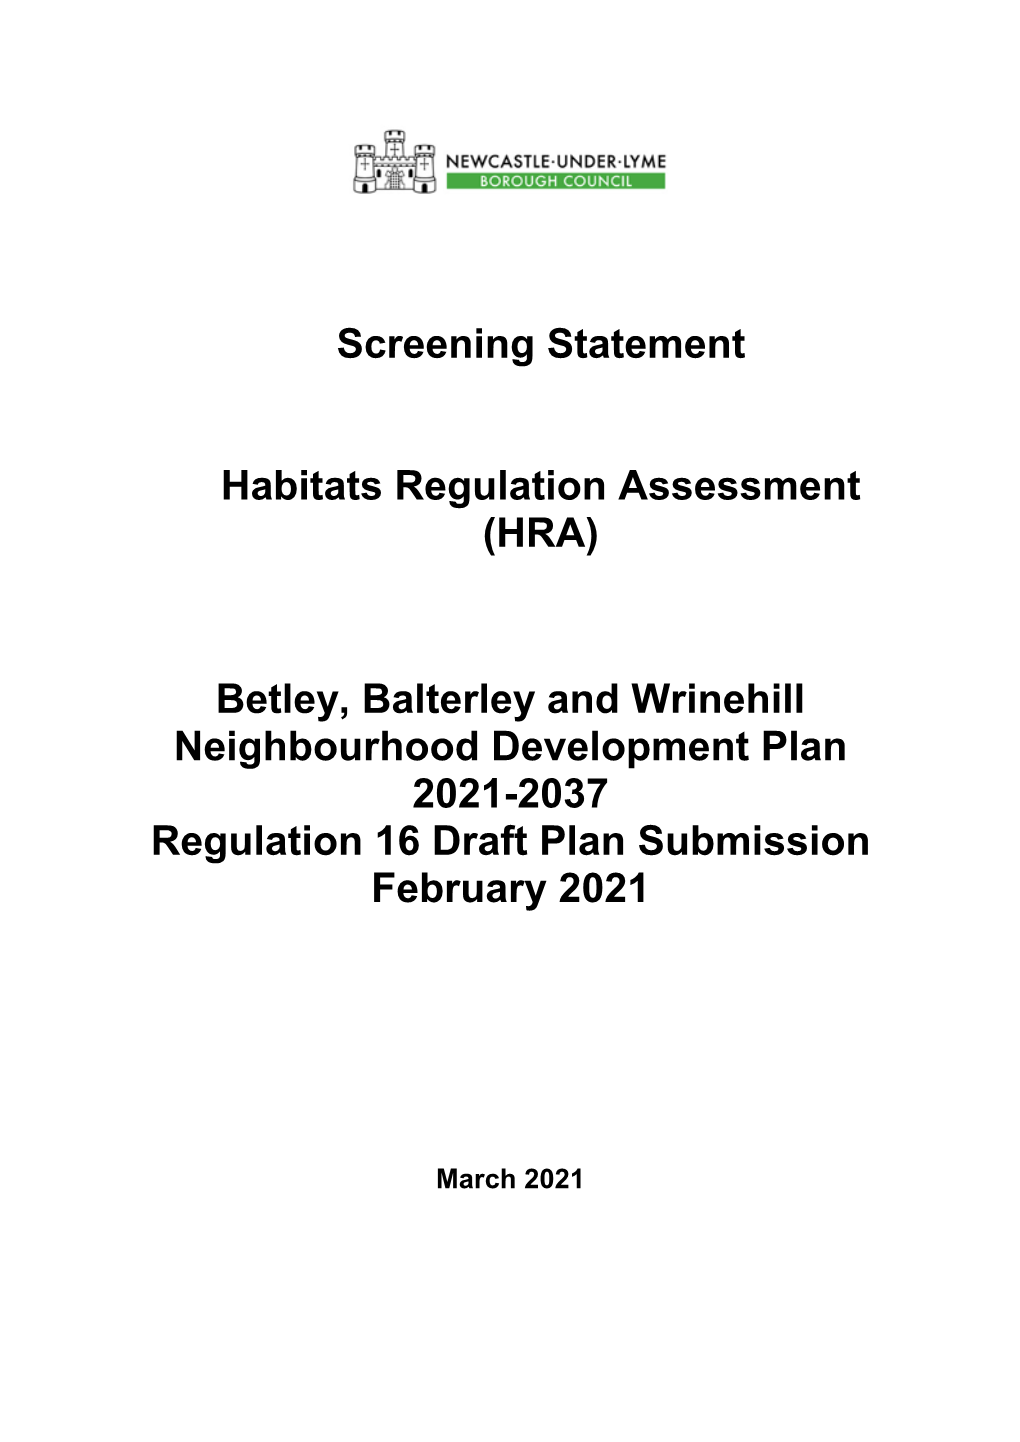 Betley, Balterley and Wrinehill Neighbourhood Development Plan 2021-2037 Regulation 16 Draft Plan Submission February 2021